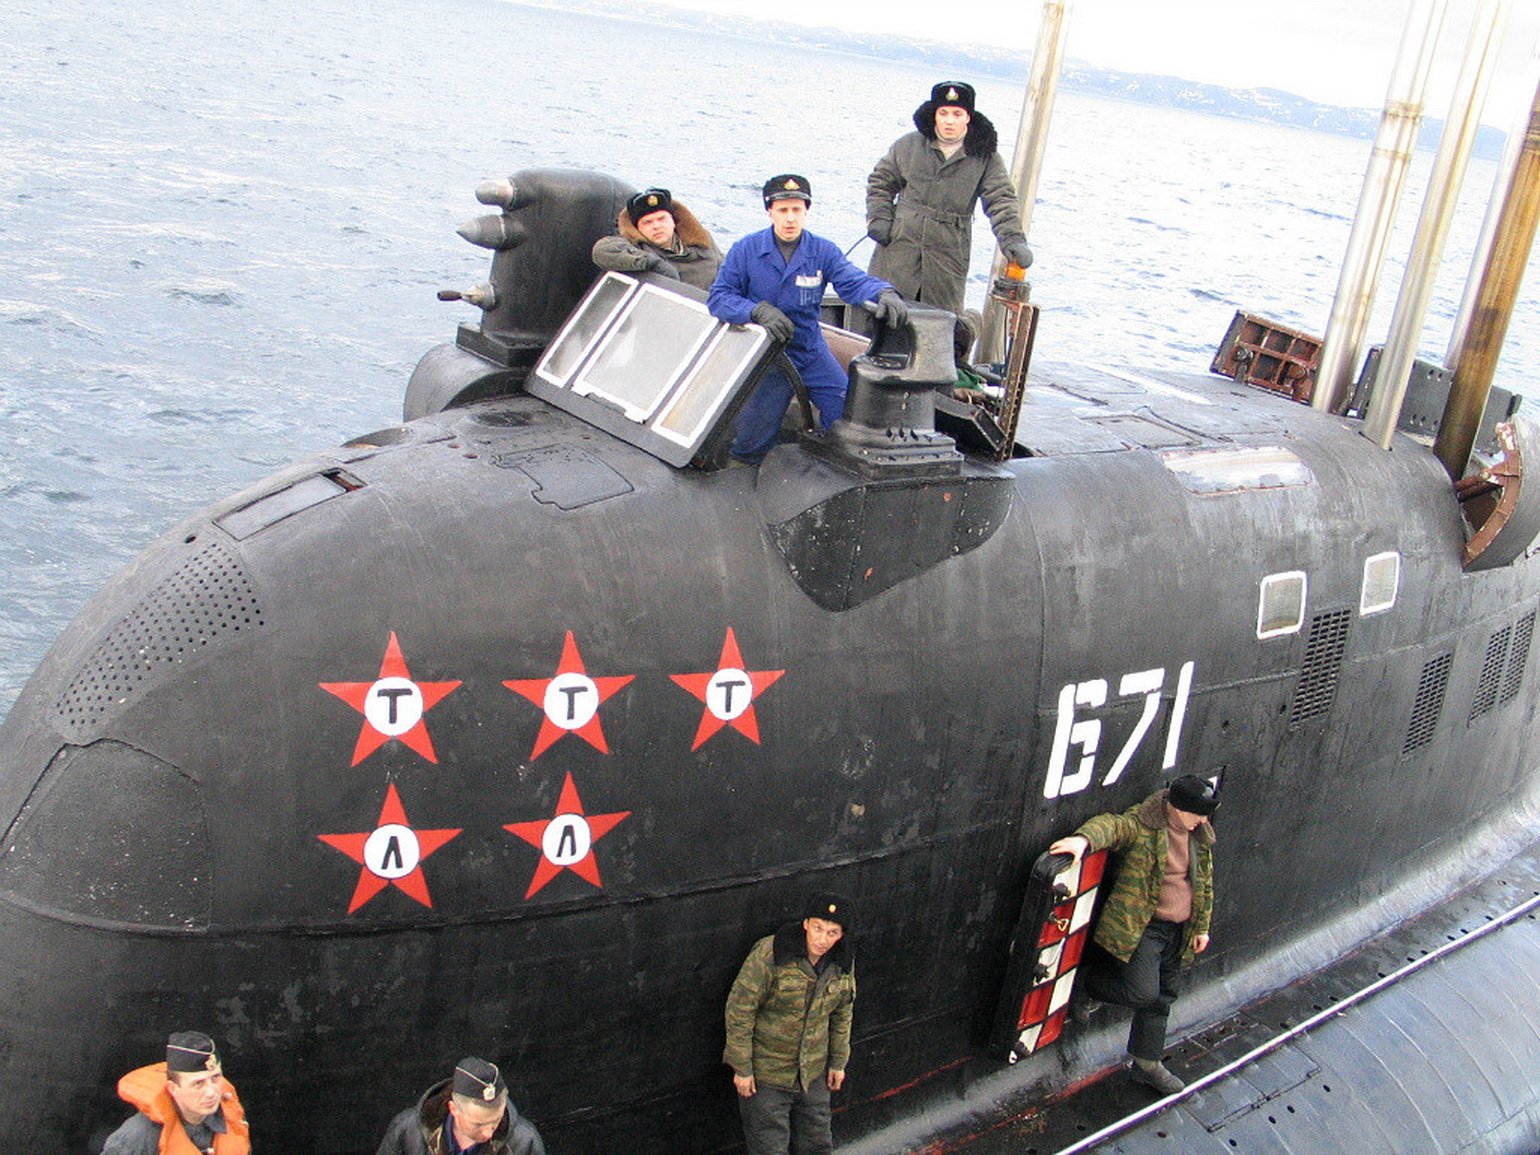 Служба апл. Подводная лодка 671 РТМК. АПЛ щука 671 РТМ. 671 РТМК проект подводная лодка. Атомная подводная лодка 671 РТМ.